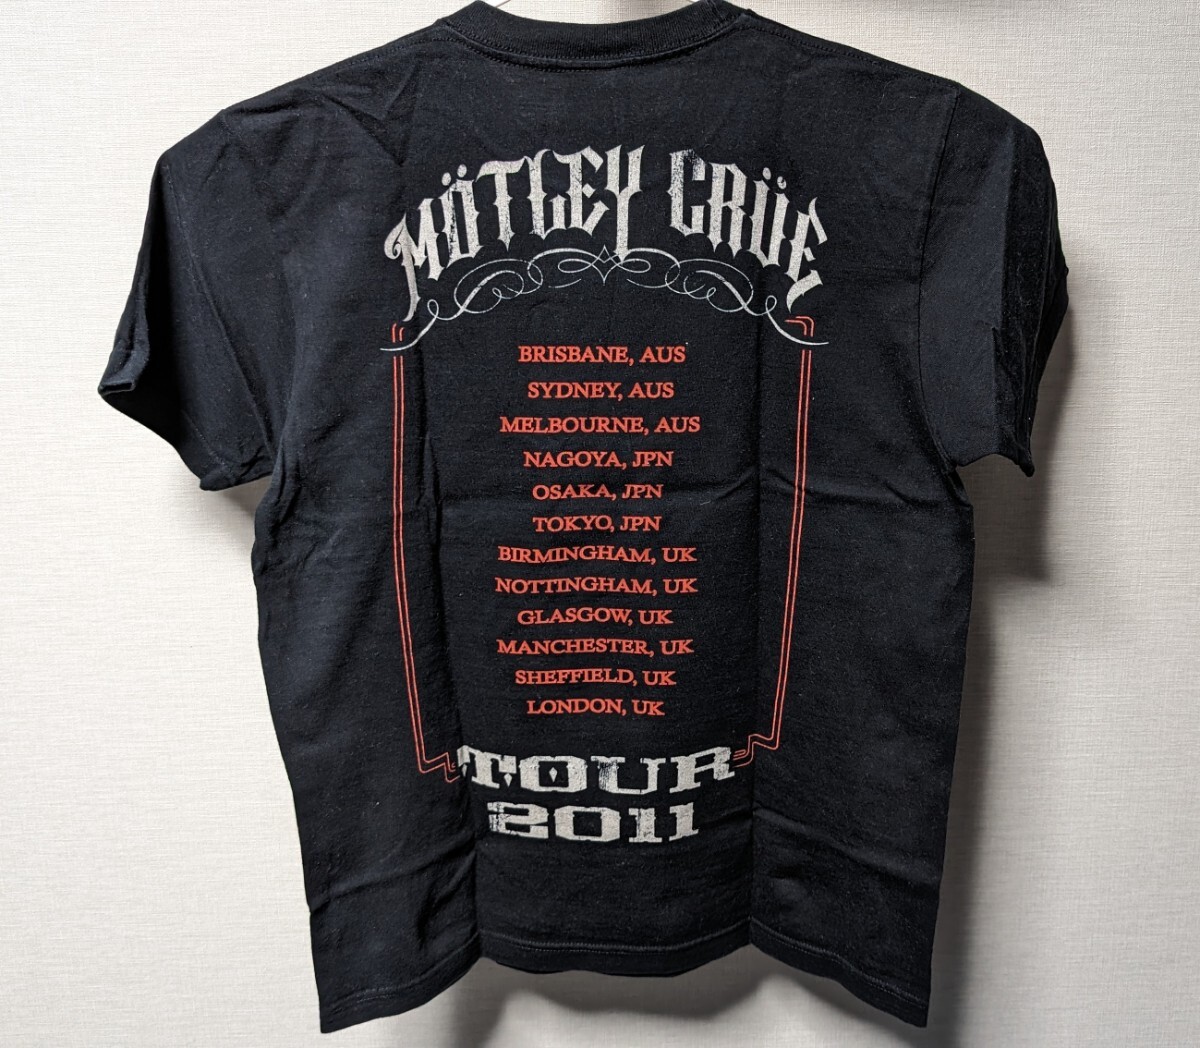 Motley Crue 2011 Tour футболка M размер Black